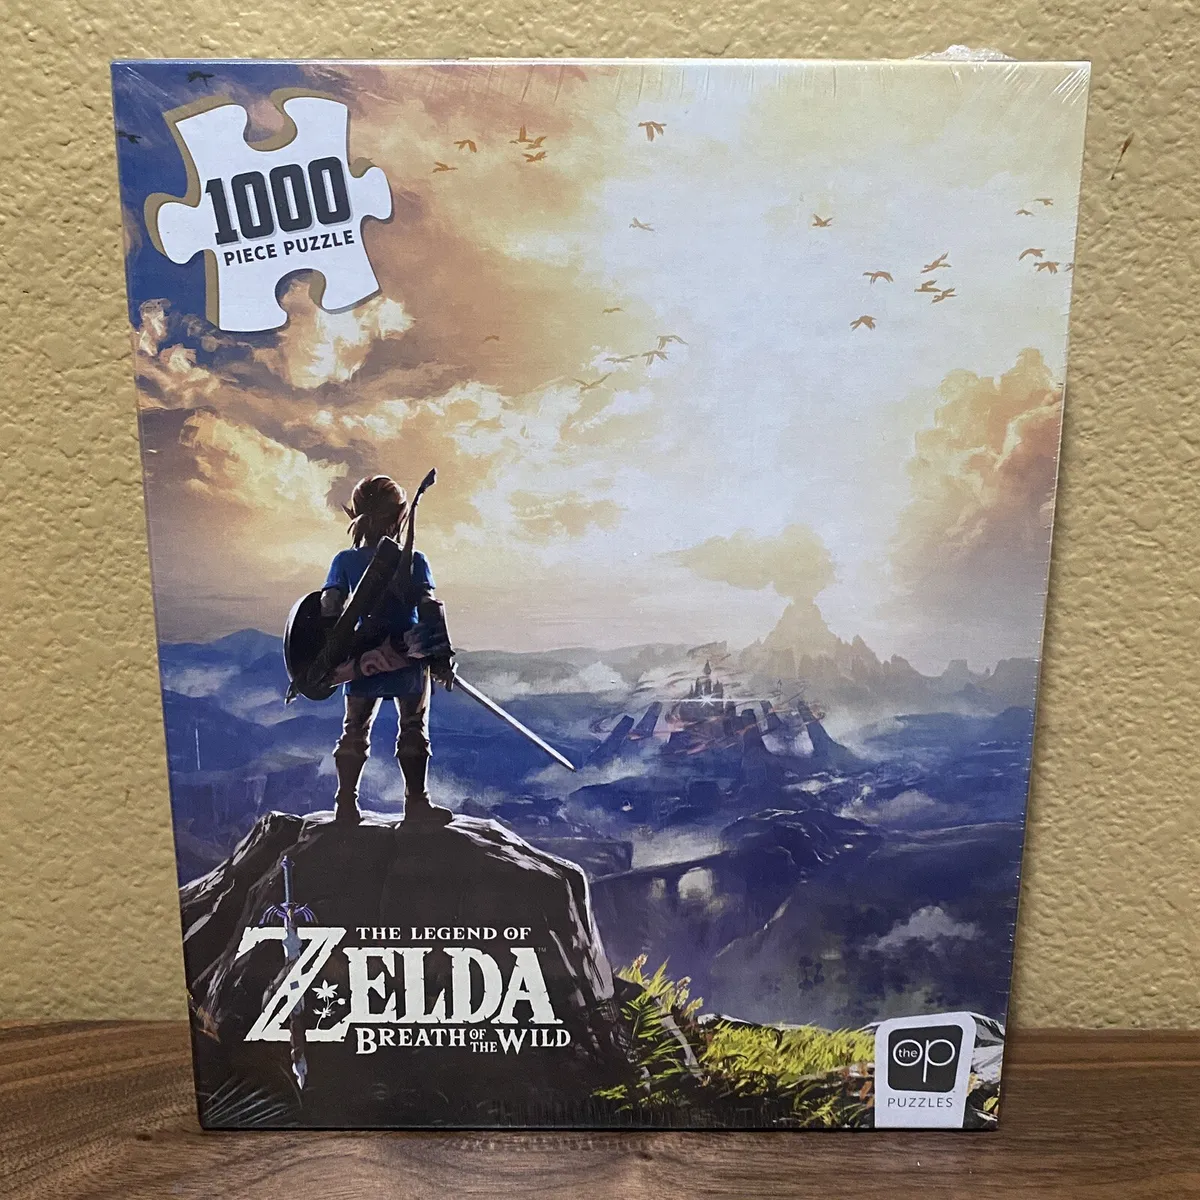 The Legend of Zelda “Breath of the Wild” 1000 Piece Puzzle